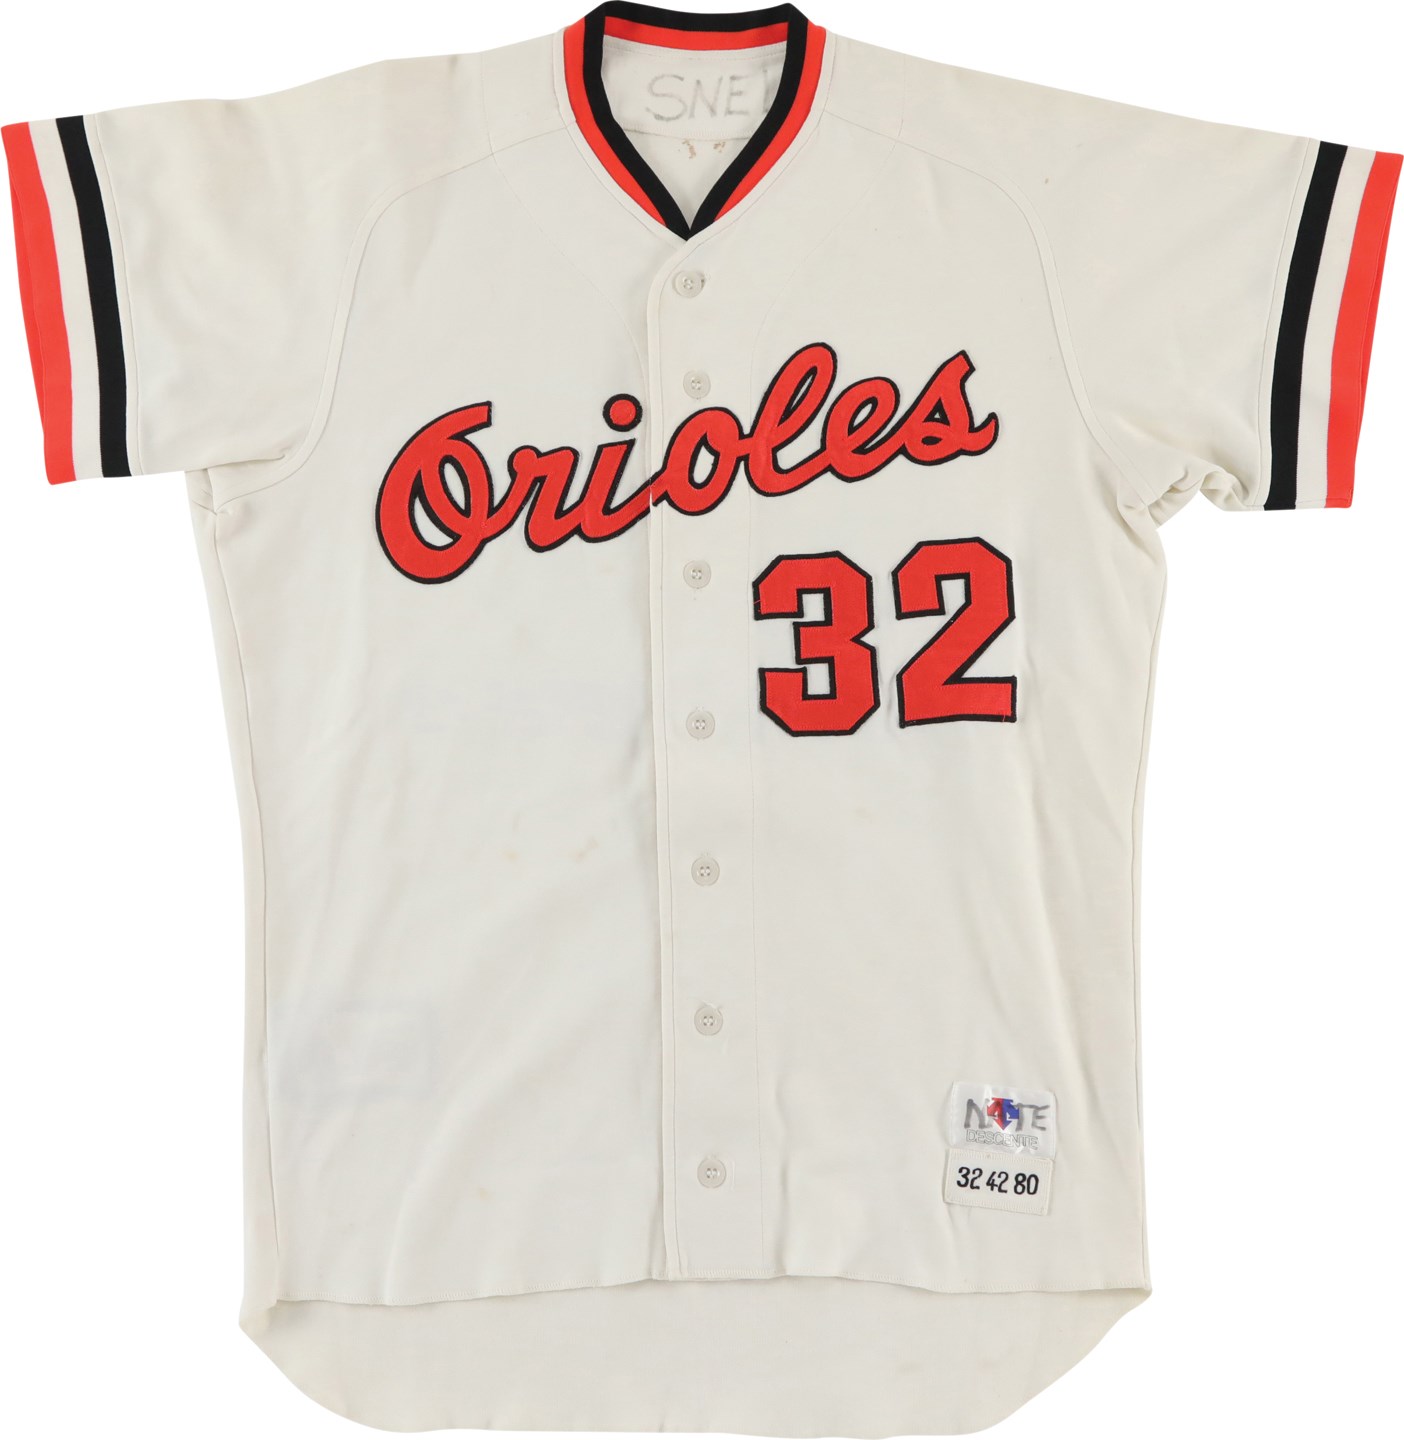 Baseball Equipment - 1980 Steve Stone Baltimore Orioles Game Worn Jersey - Cy Young Award Season